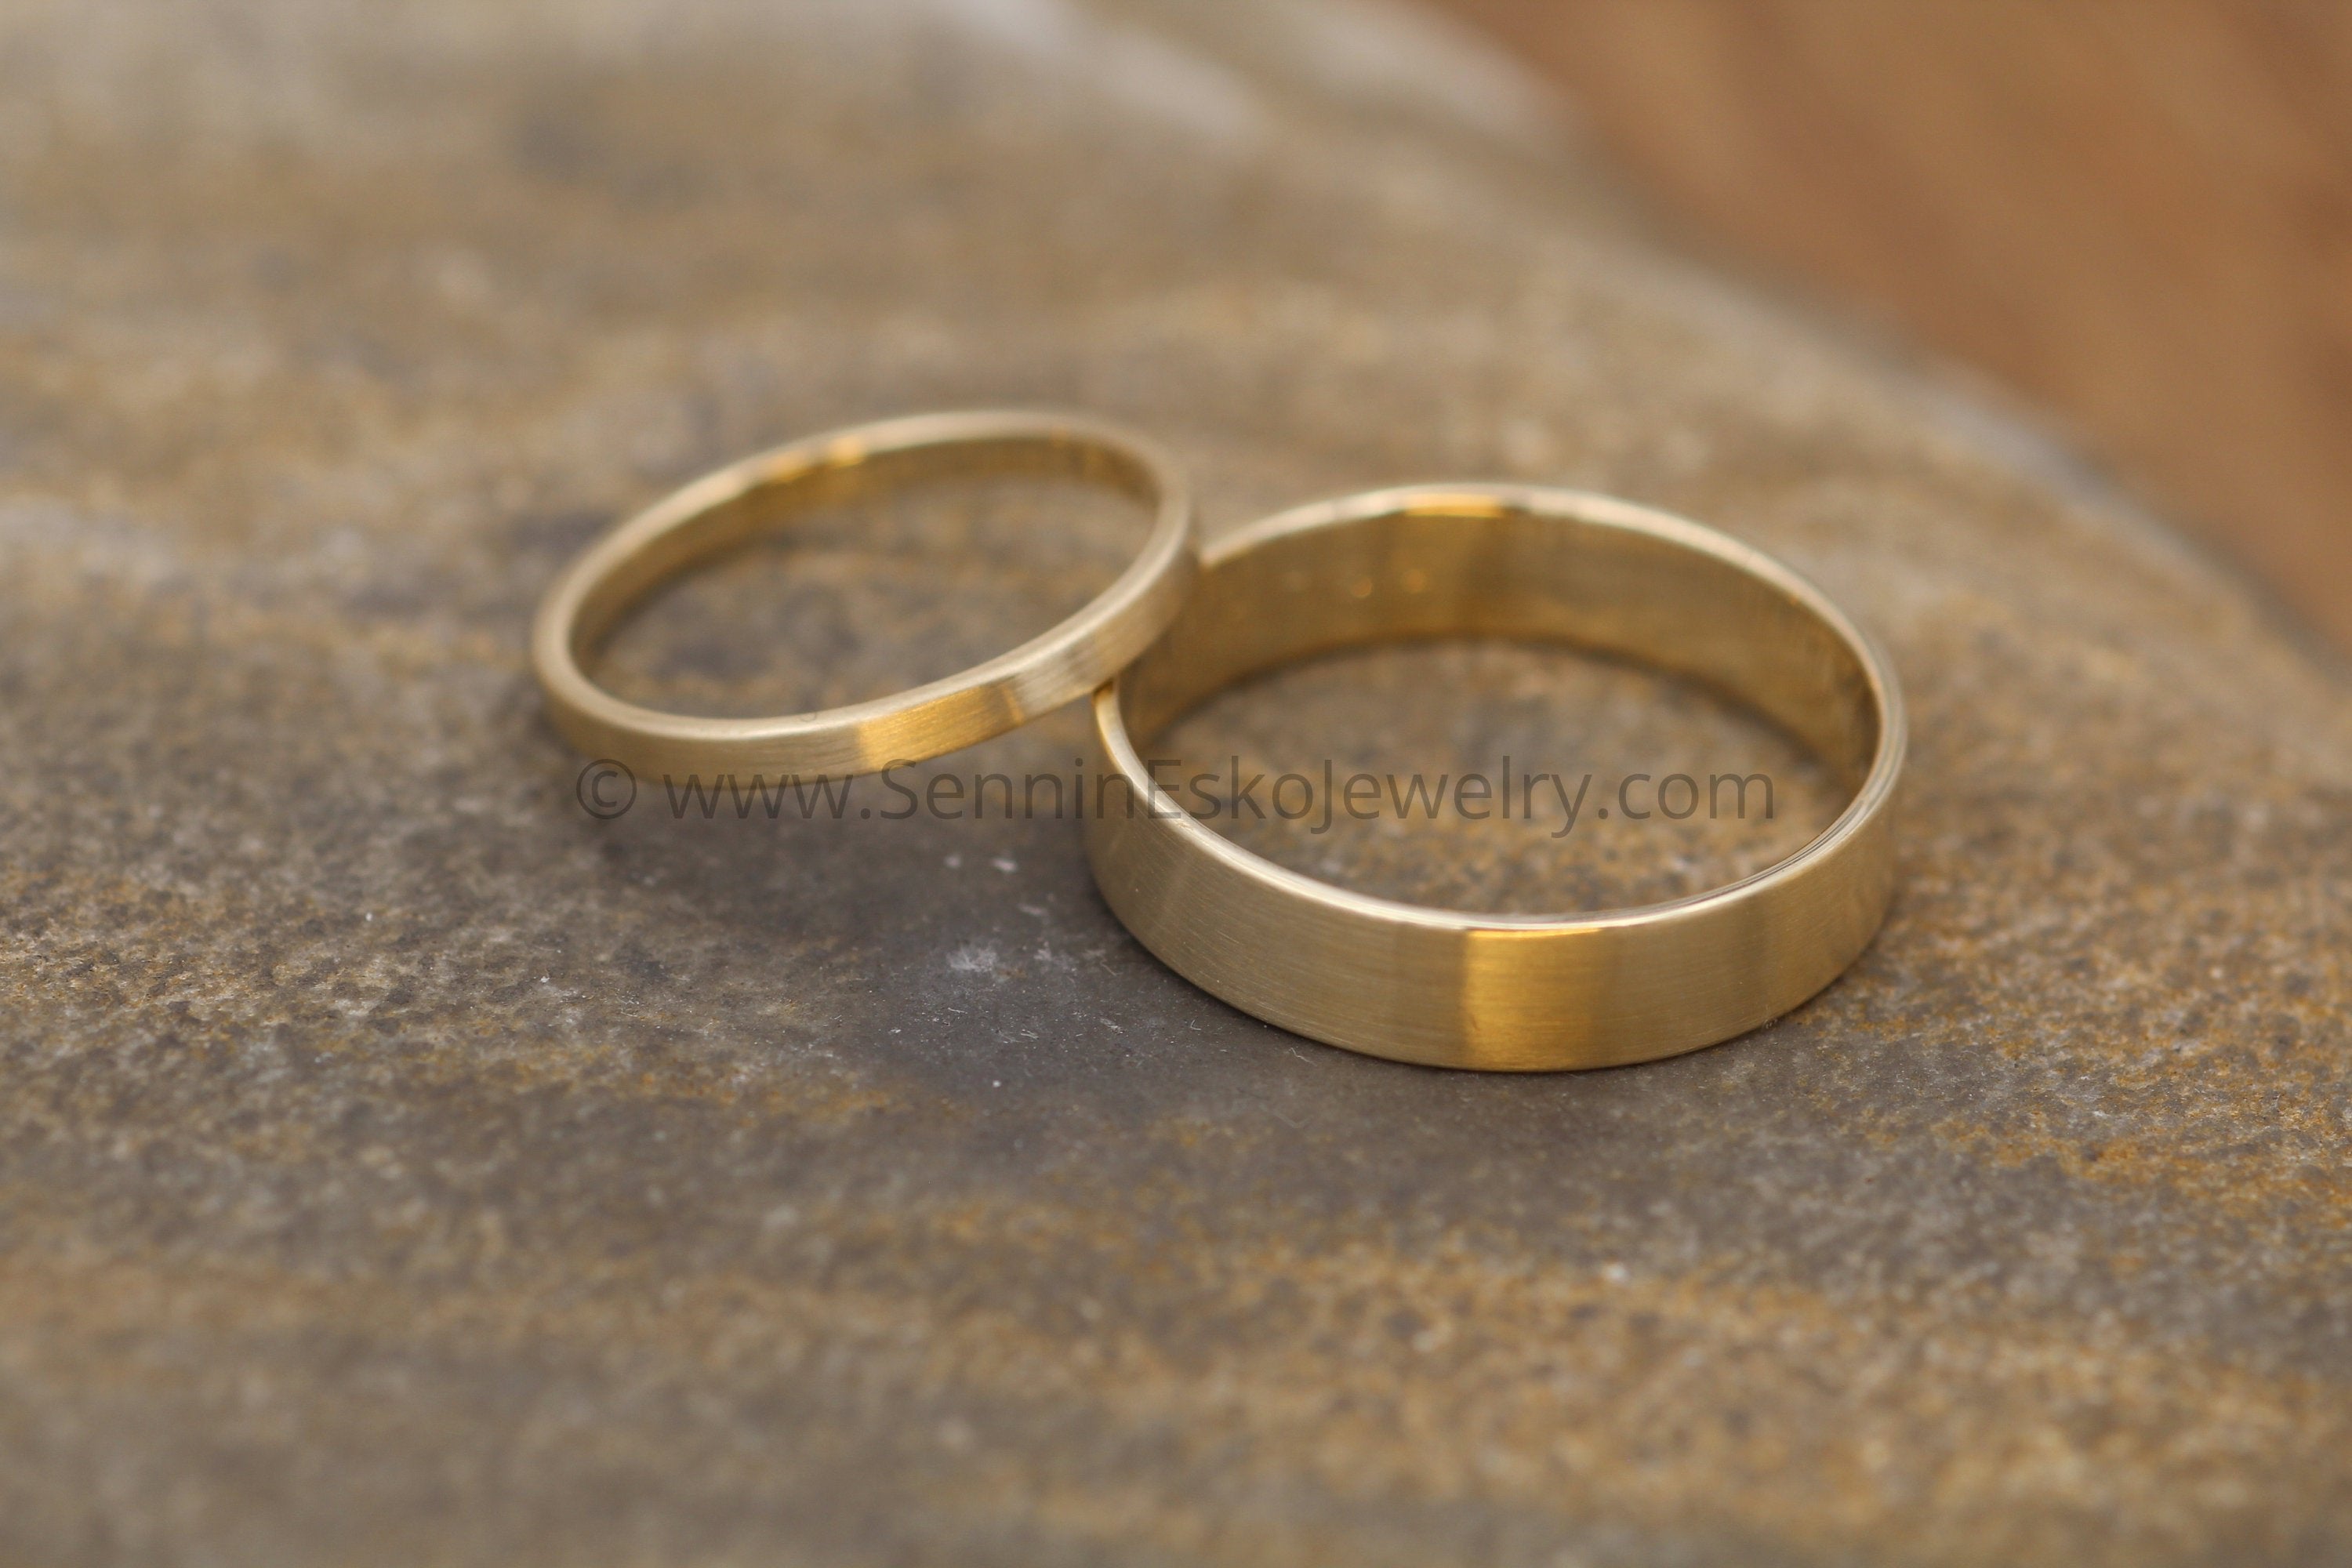 gold wedding rings | wedding rings gold | gold rings online | gold rings | gold  wedding rings for men | wedding rings for women